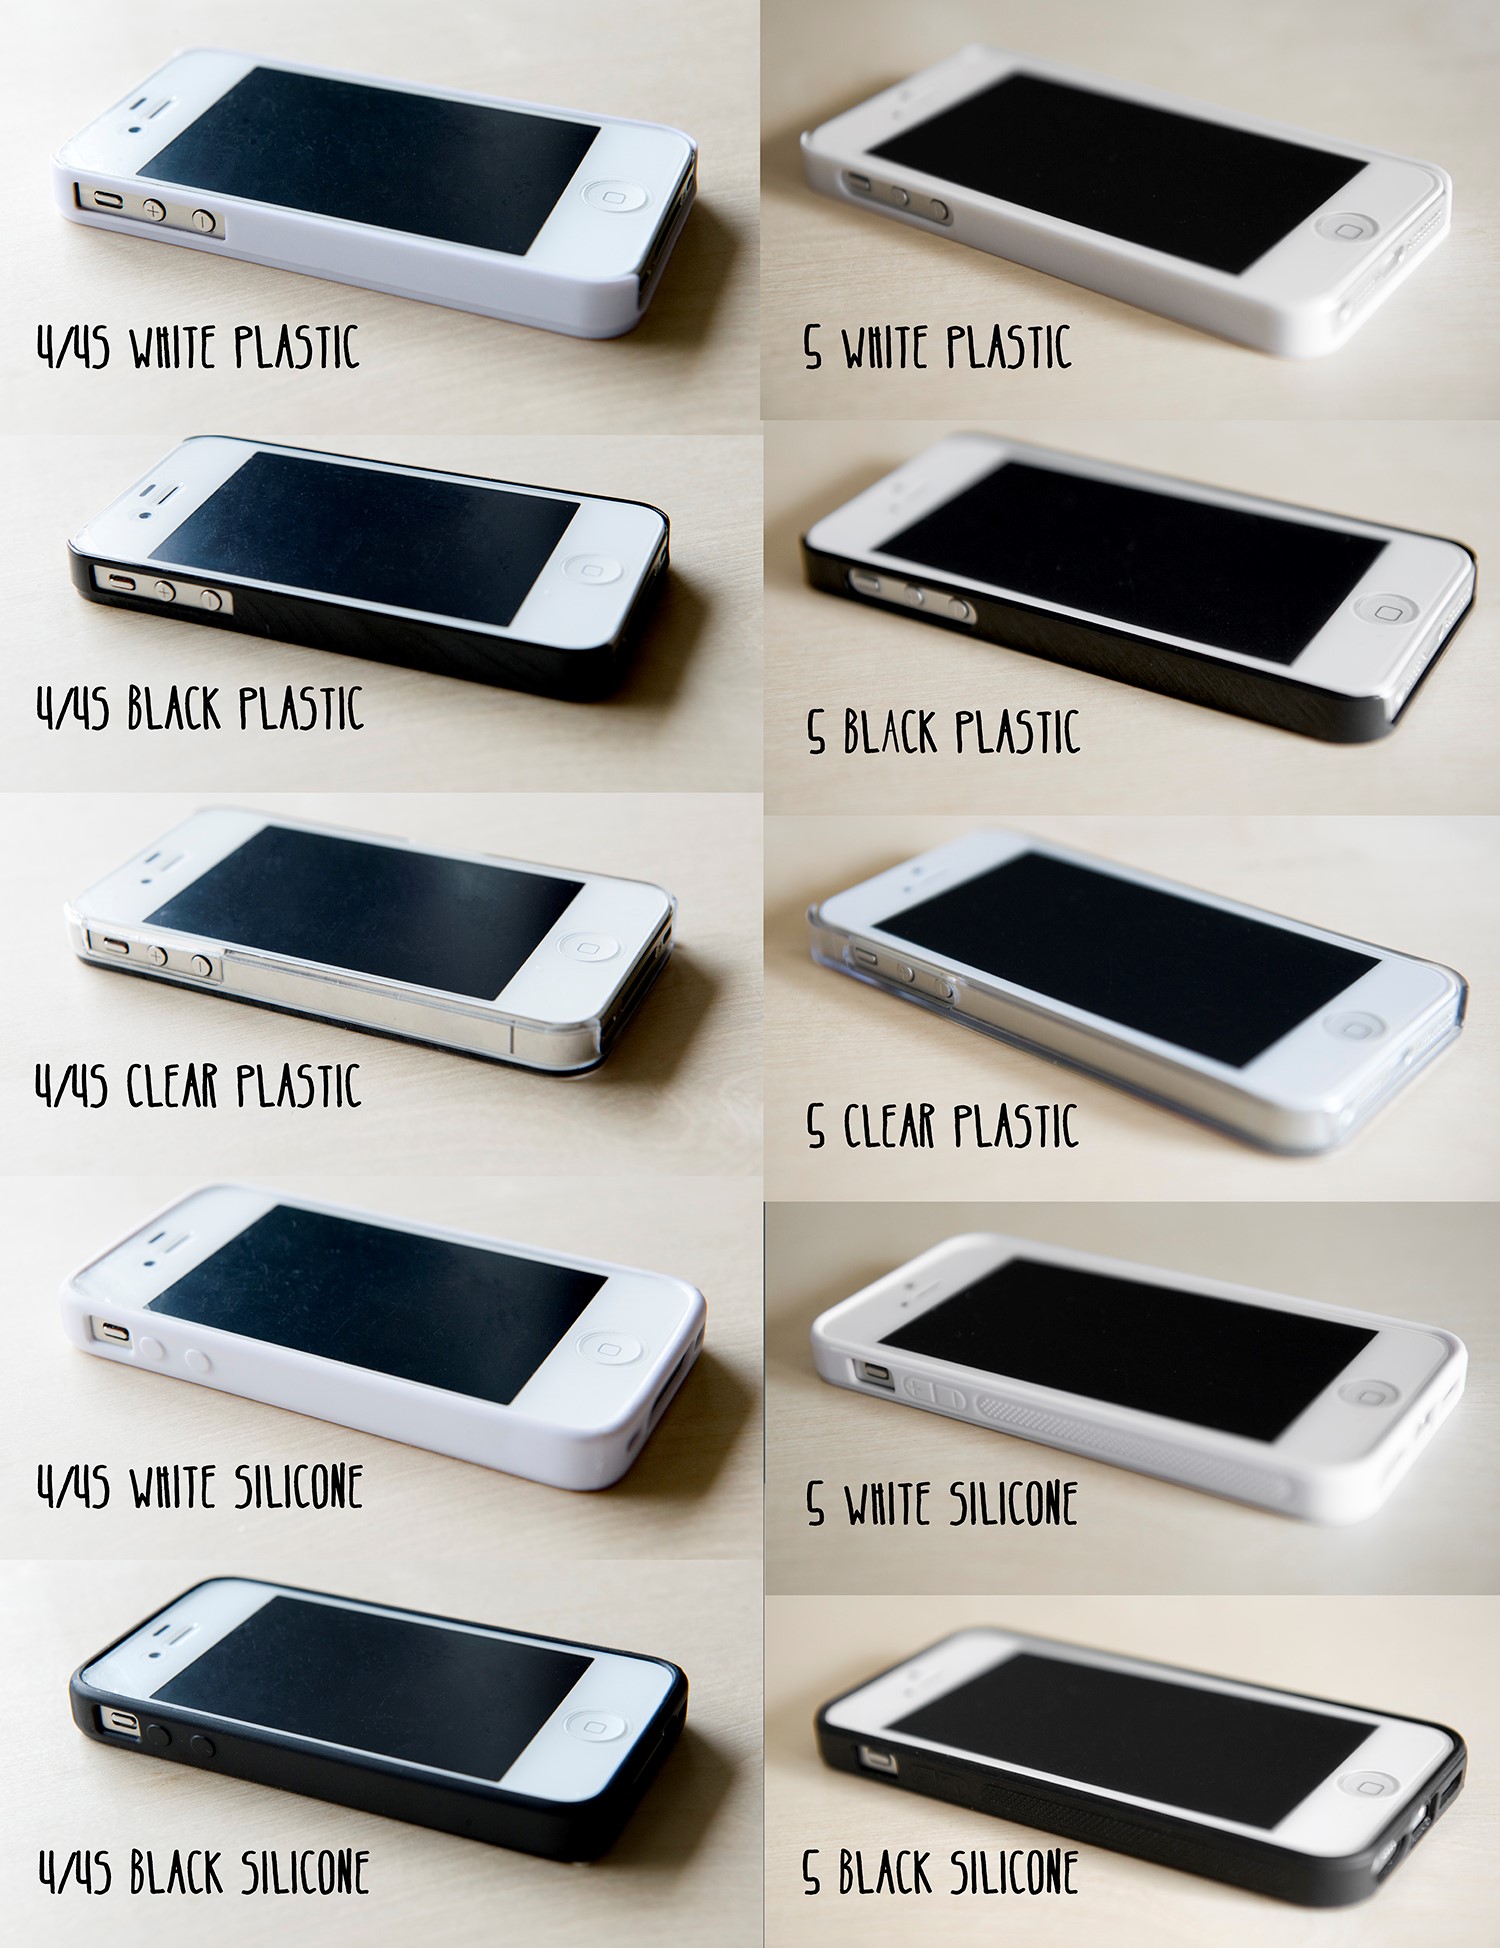 cool iphone 4 cases tumblr wallpaper | wallpaperil.com | Free ...